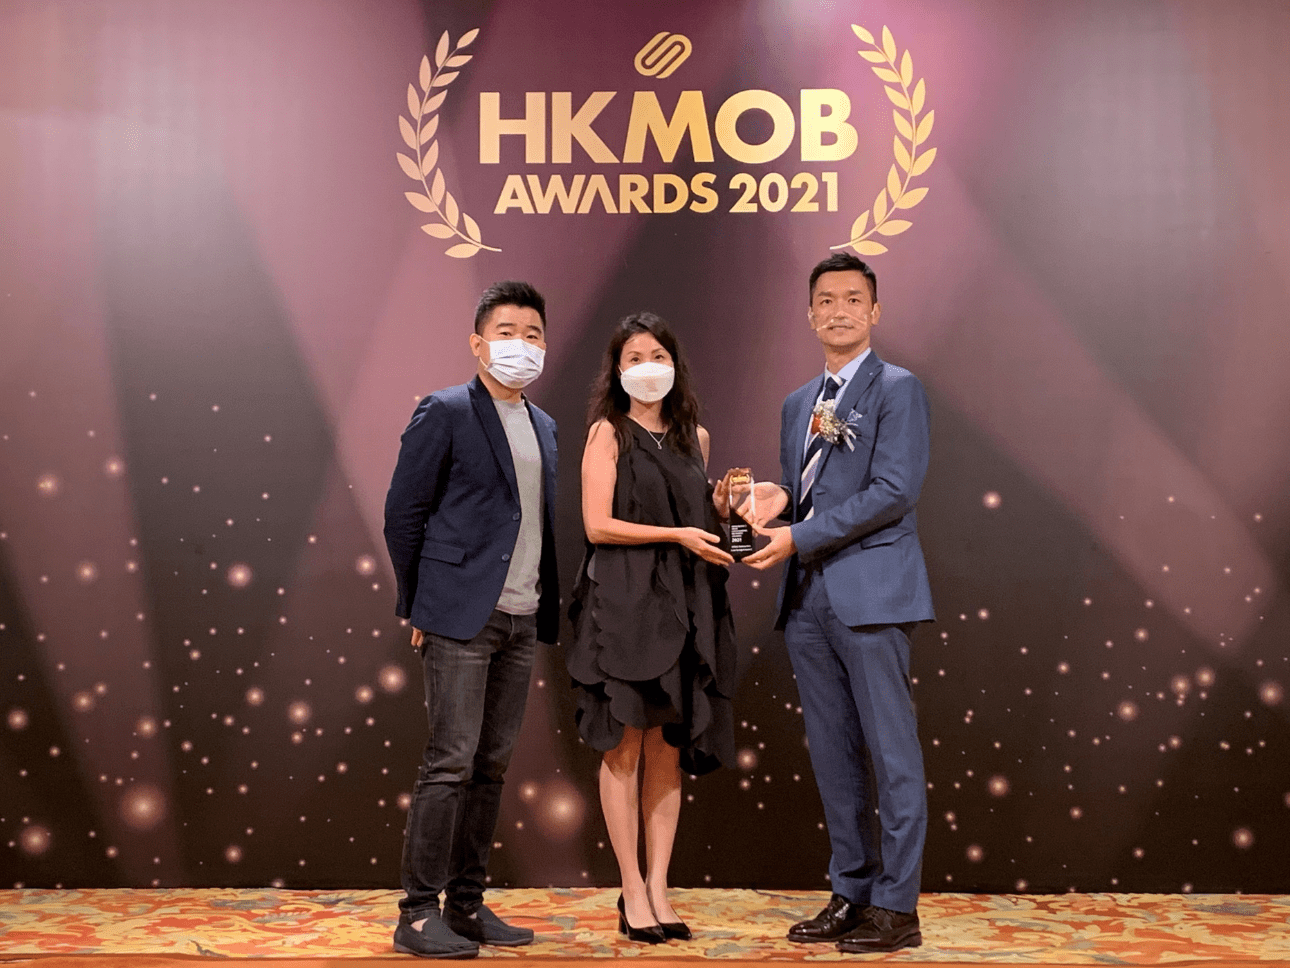 iClick garnered the “Asia Best-In-Class Digital Marketing Technology” award at HKMOB Awards 2021